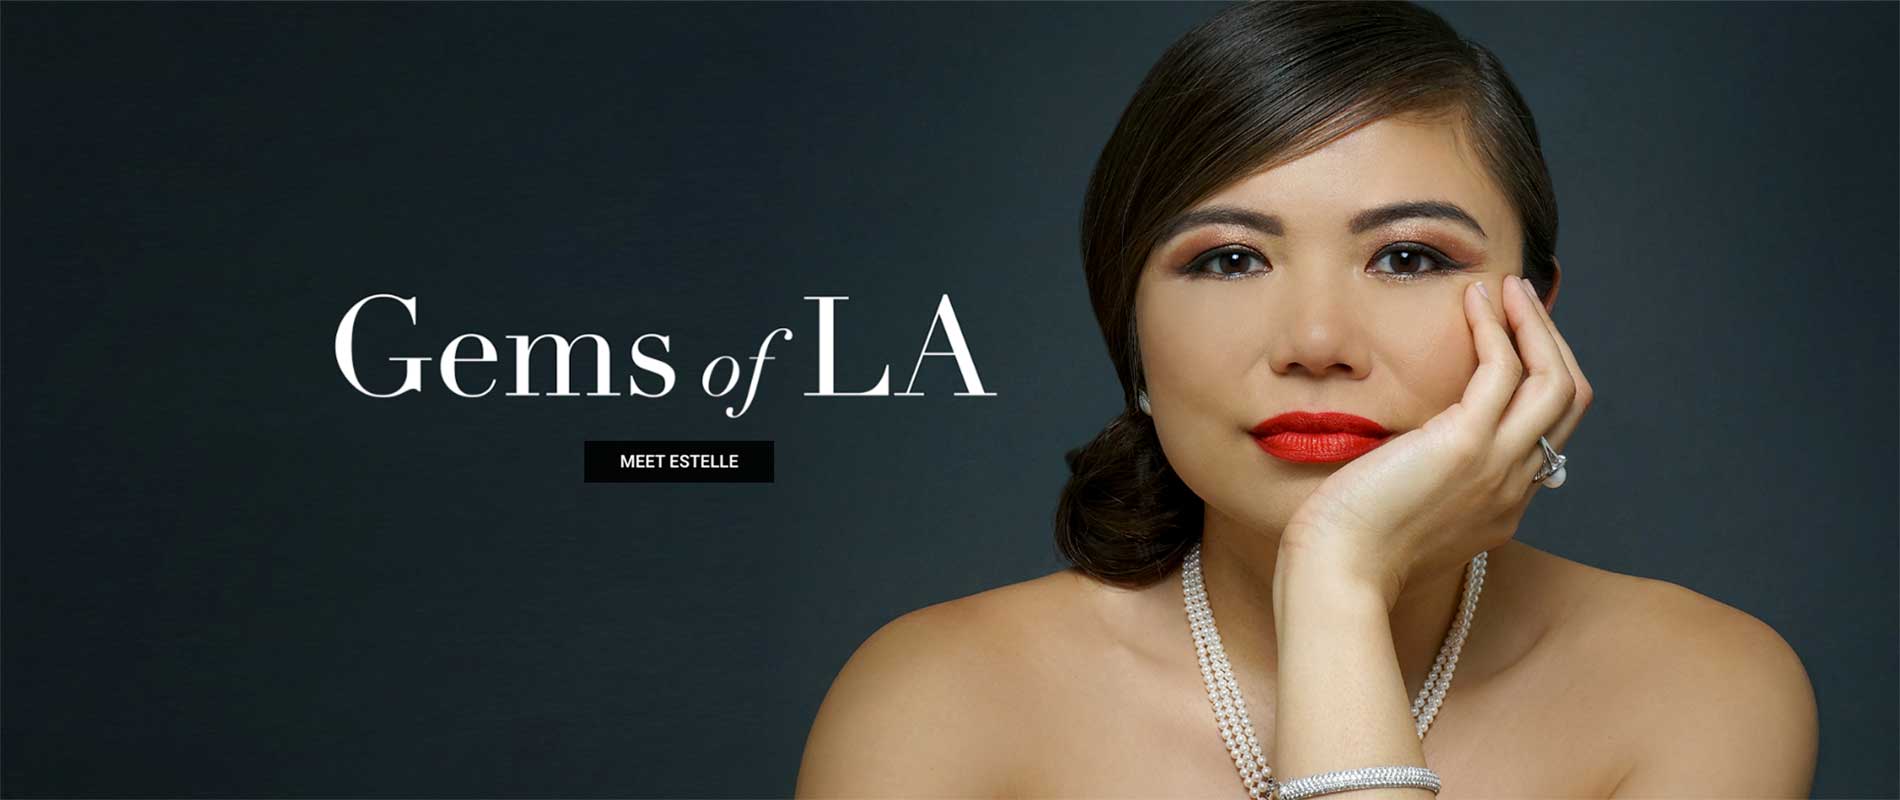 Gems of LA promotional image